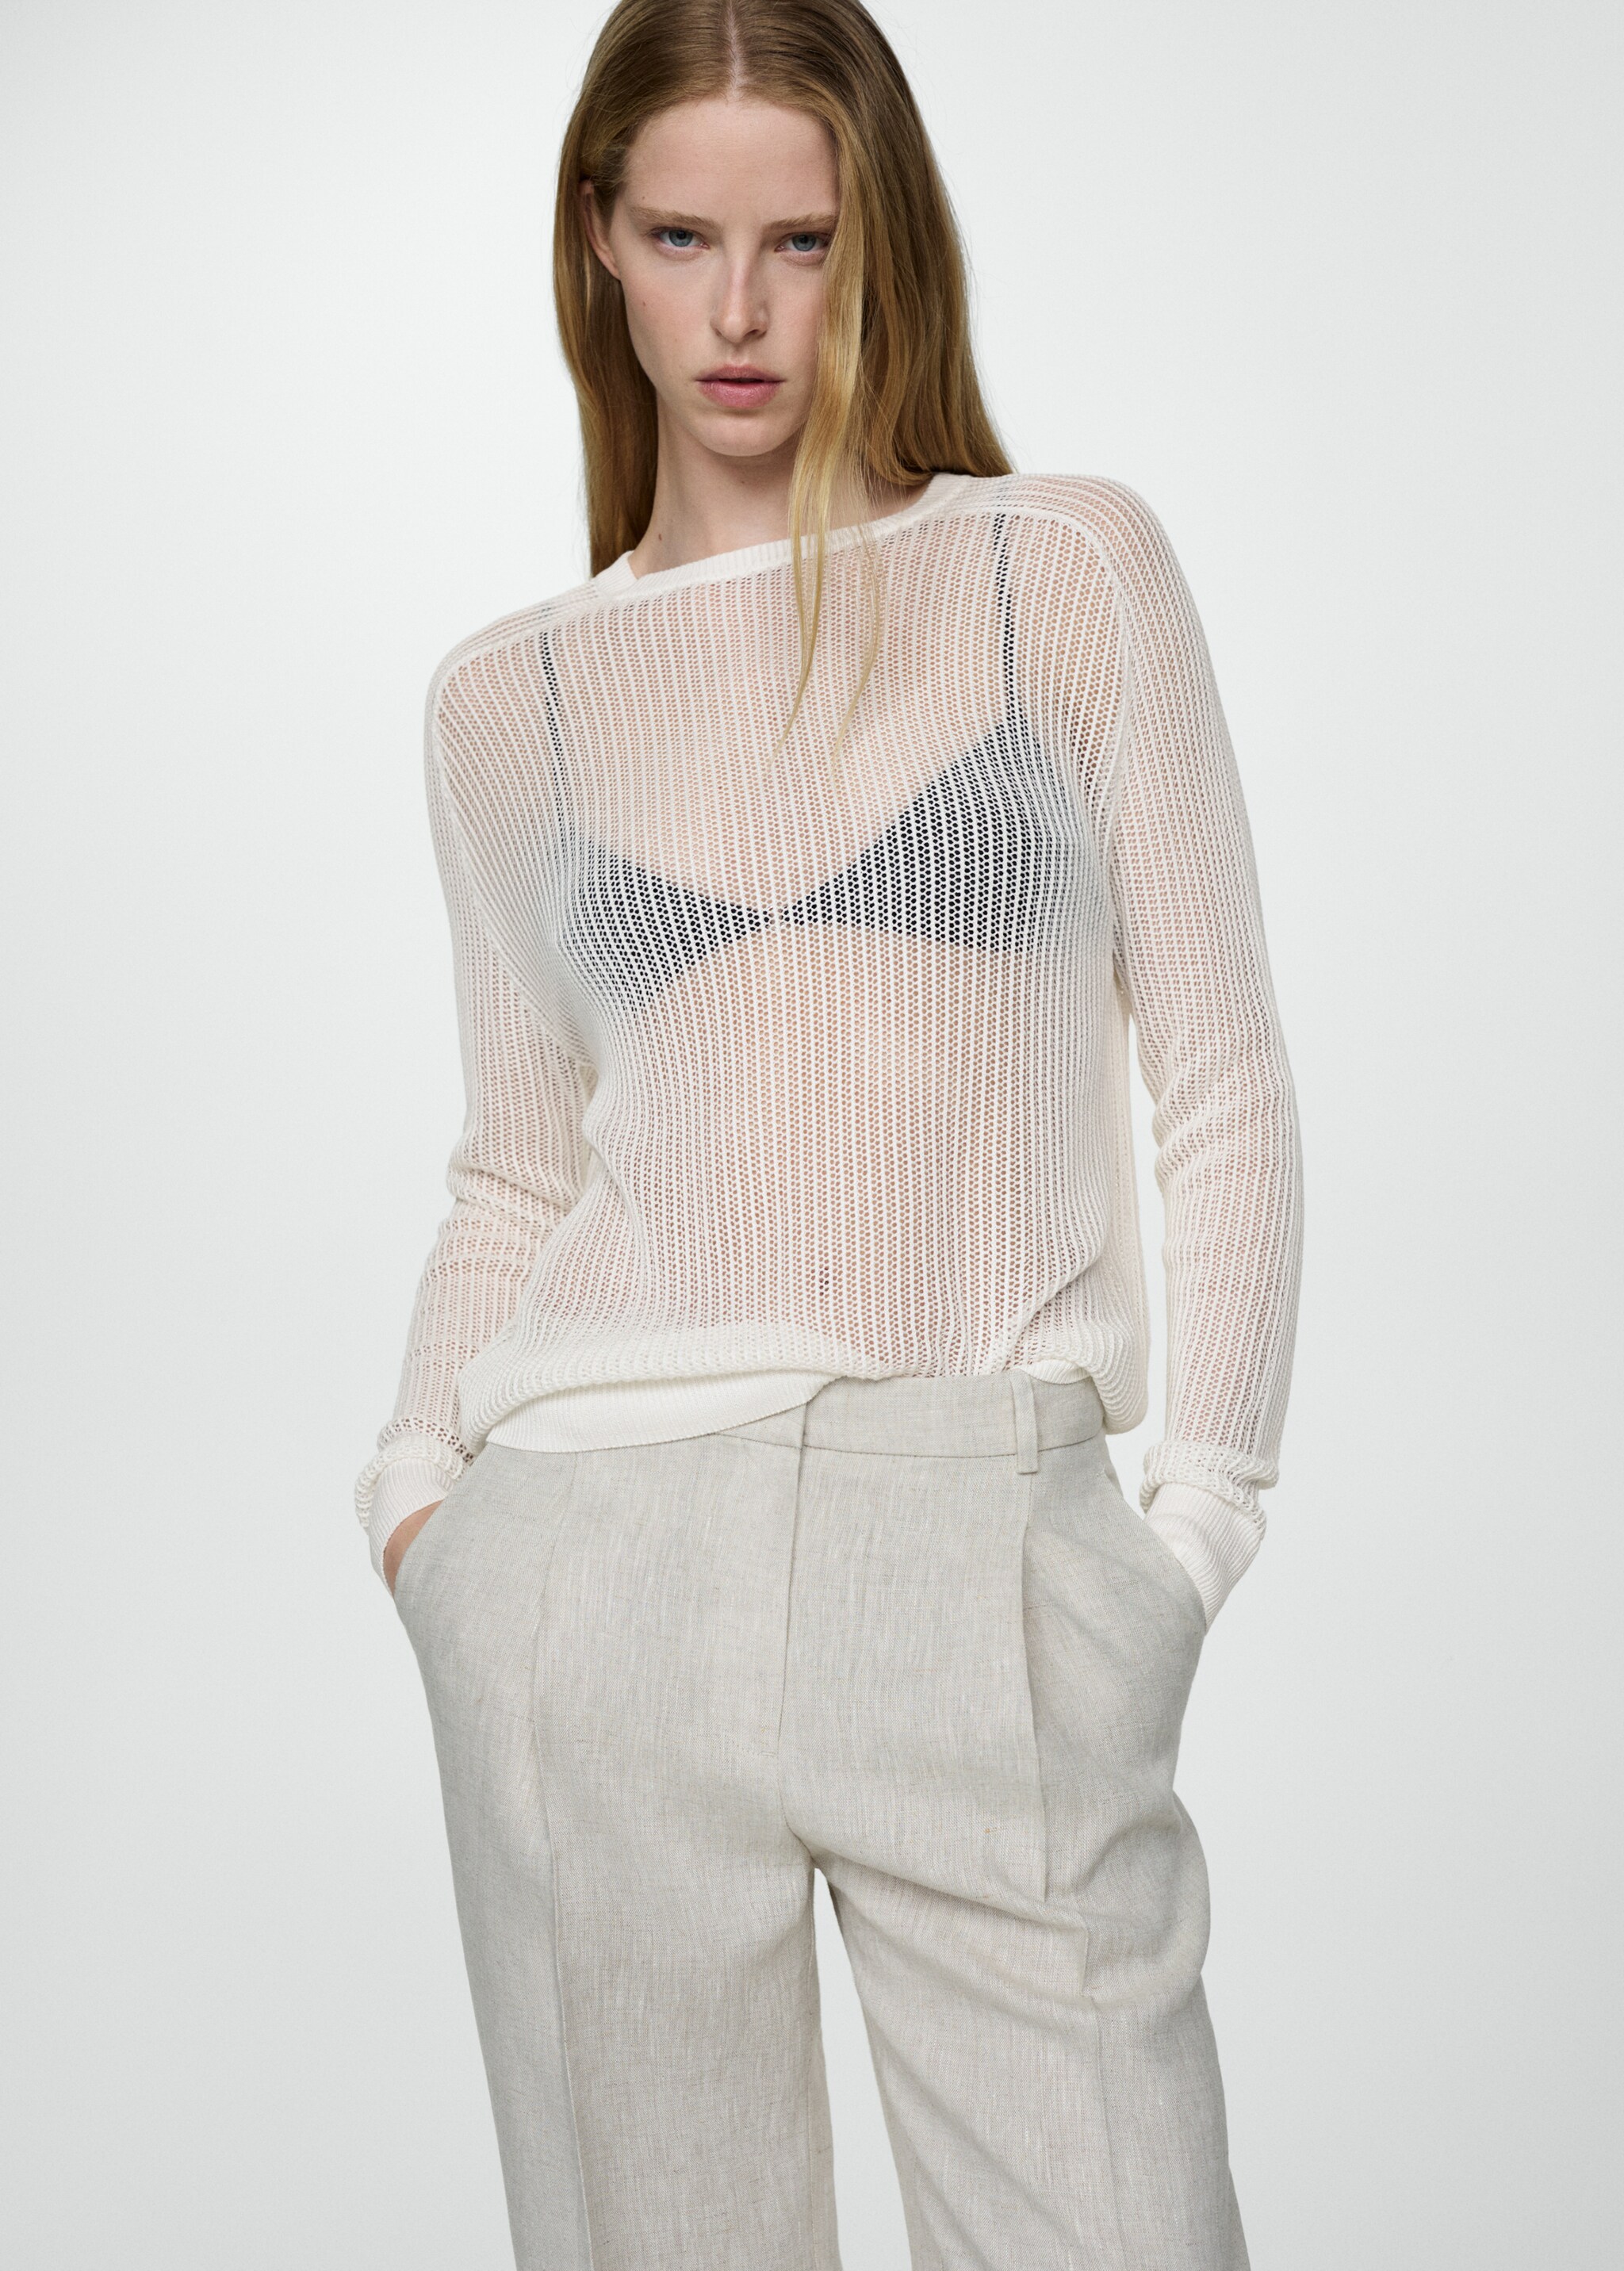 Semi-transparent knitted sweater - Medium plane